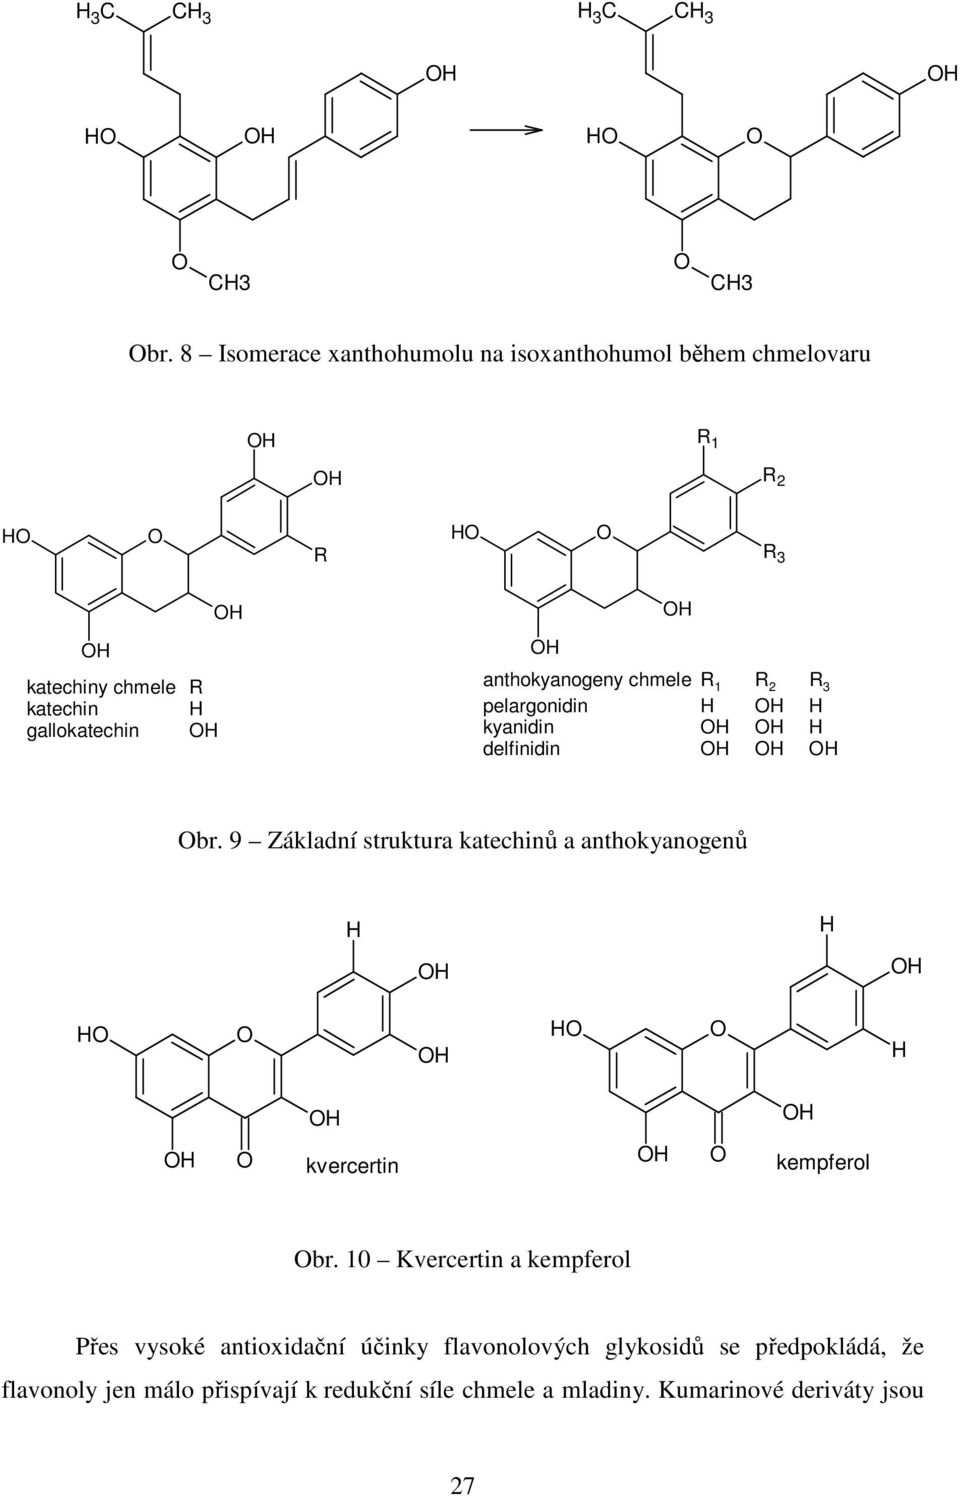 anthokyanogeny chmele R 1 R 2 R 3 pelargonidin H H kyanidin H delfinidin br.